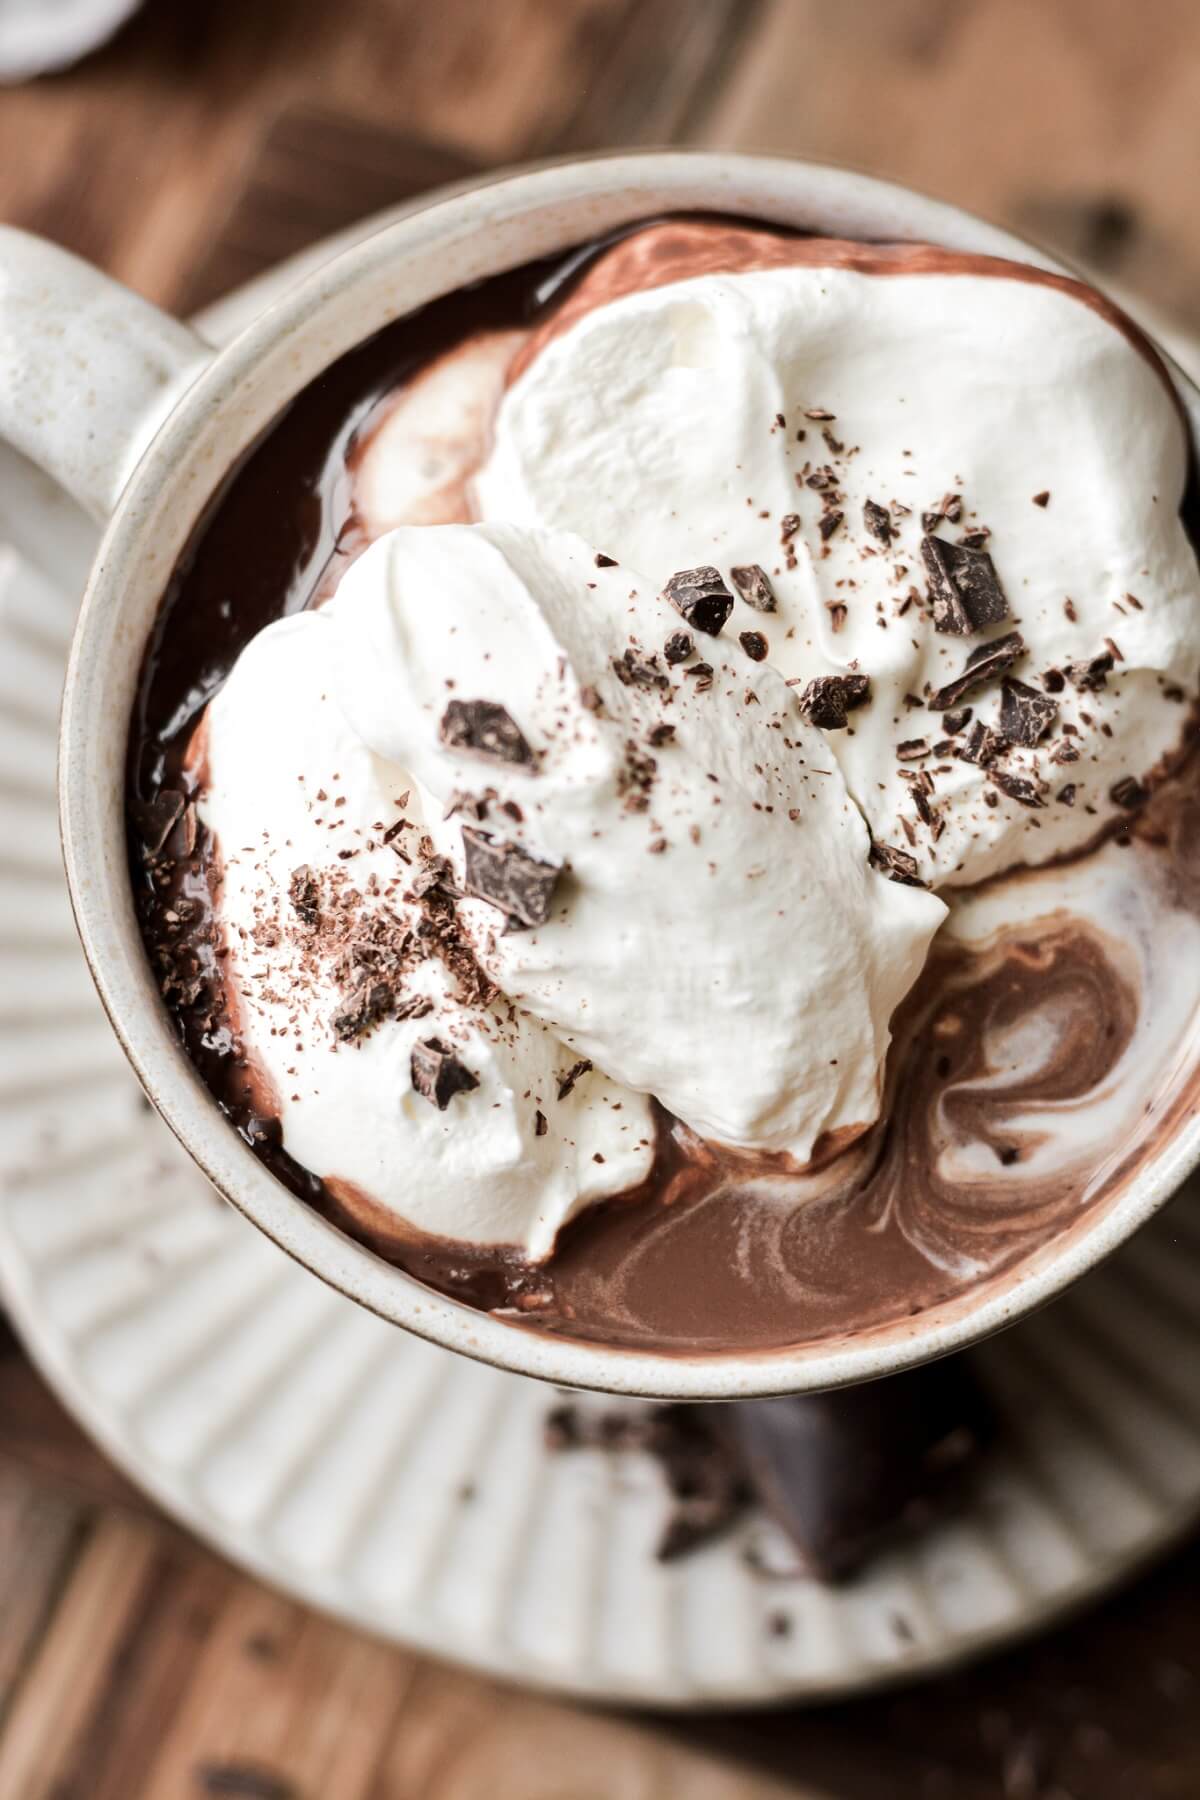 Chocolate shavings and whipped cream on European hot chocolate.